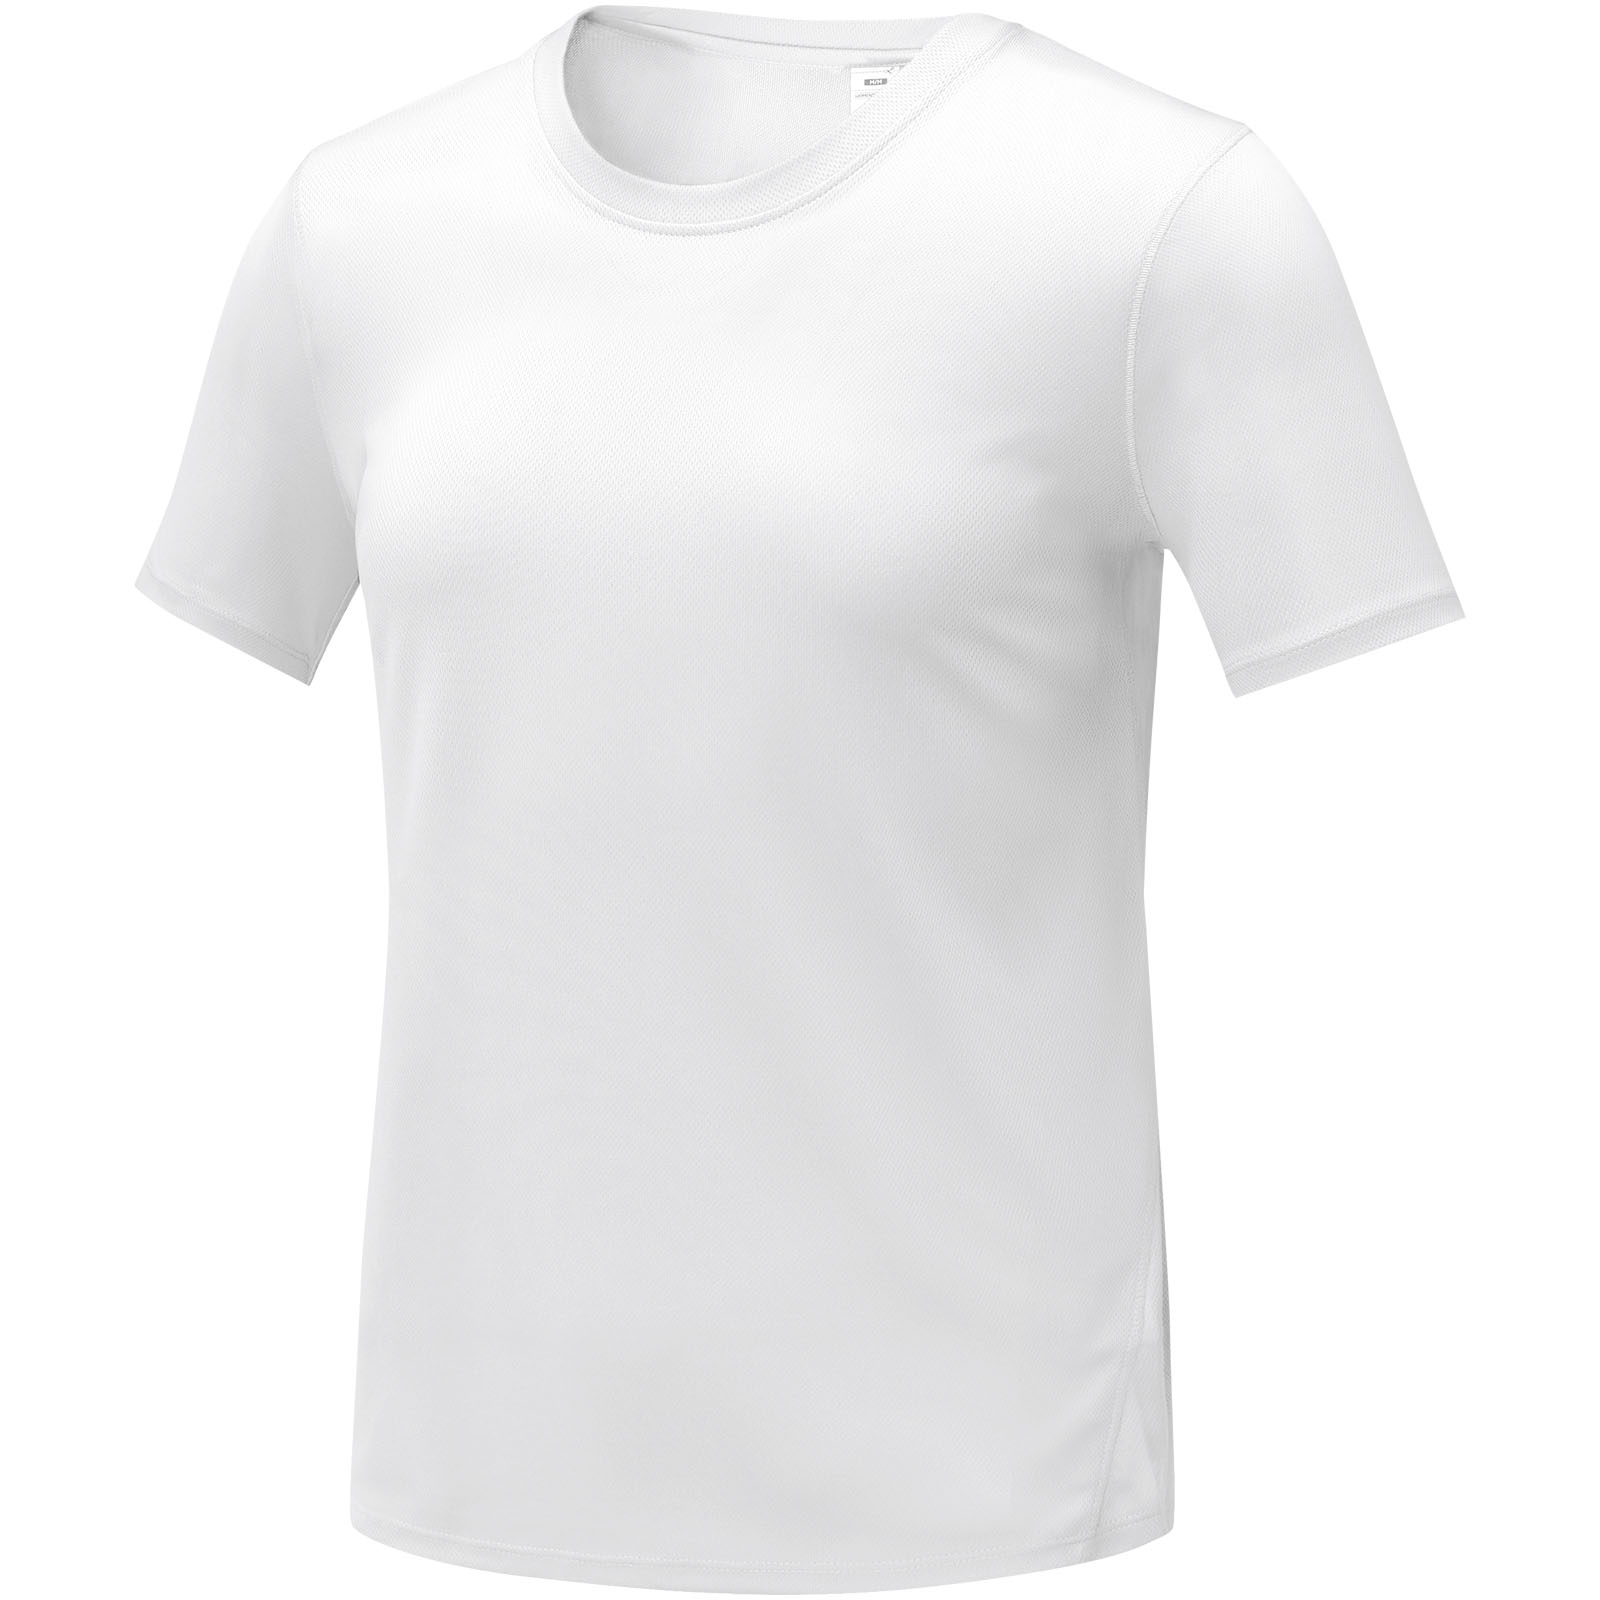 Advertising T-shirts - Kratos short sleeve women's cool fit t-shirt